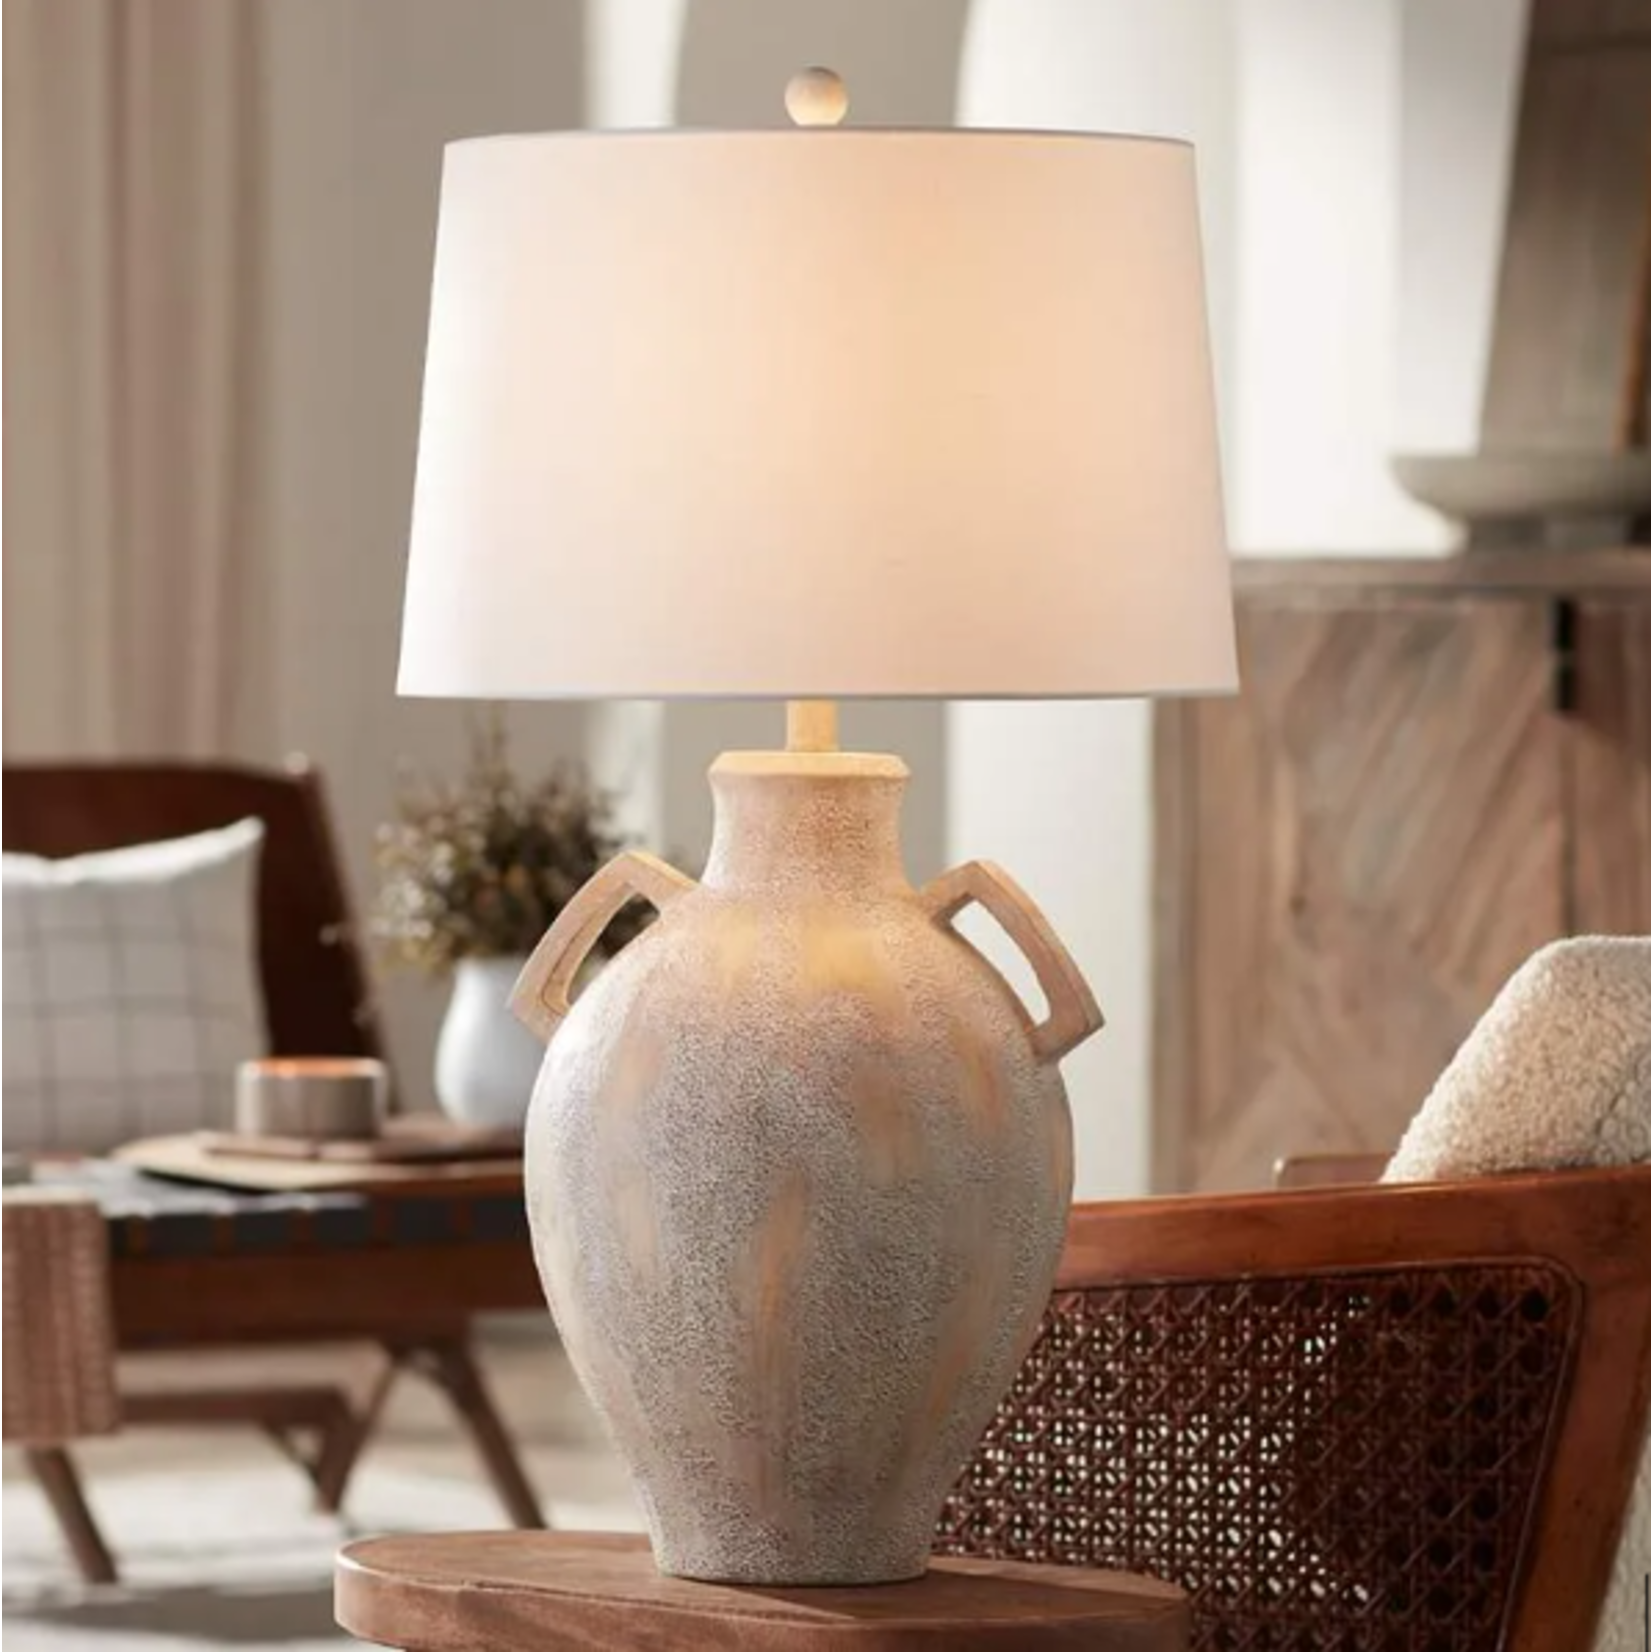 Mickler & Co. Petula Table Lamp